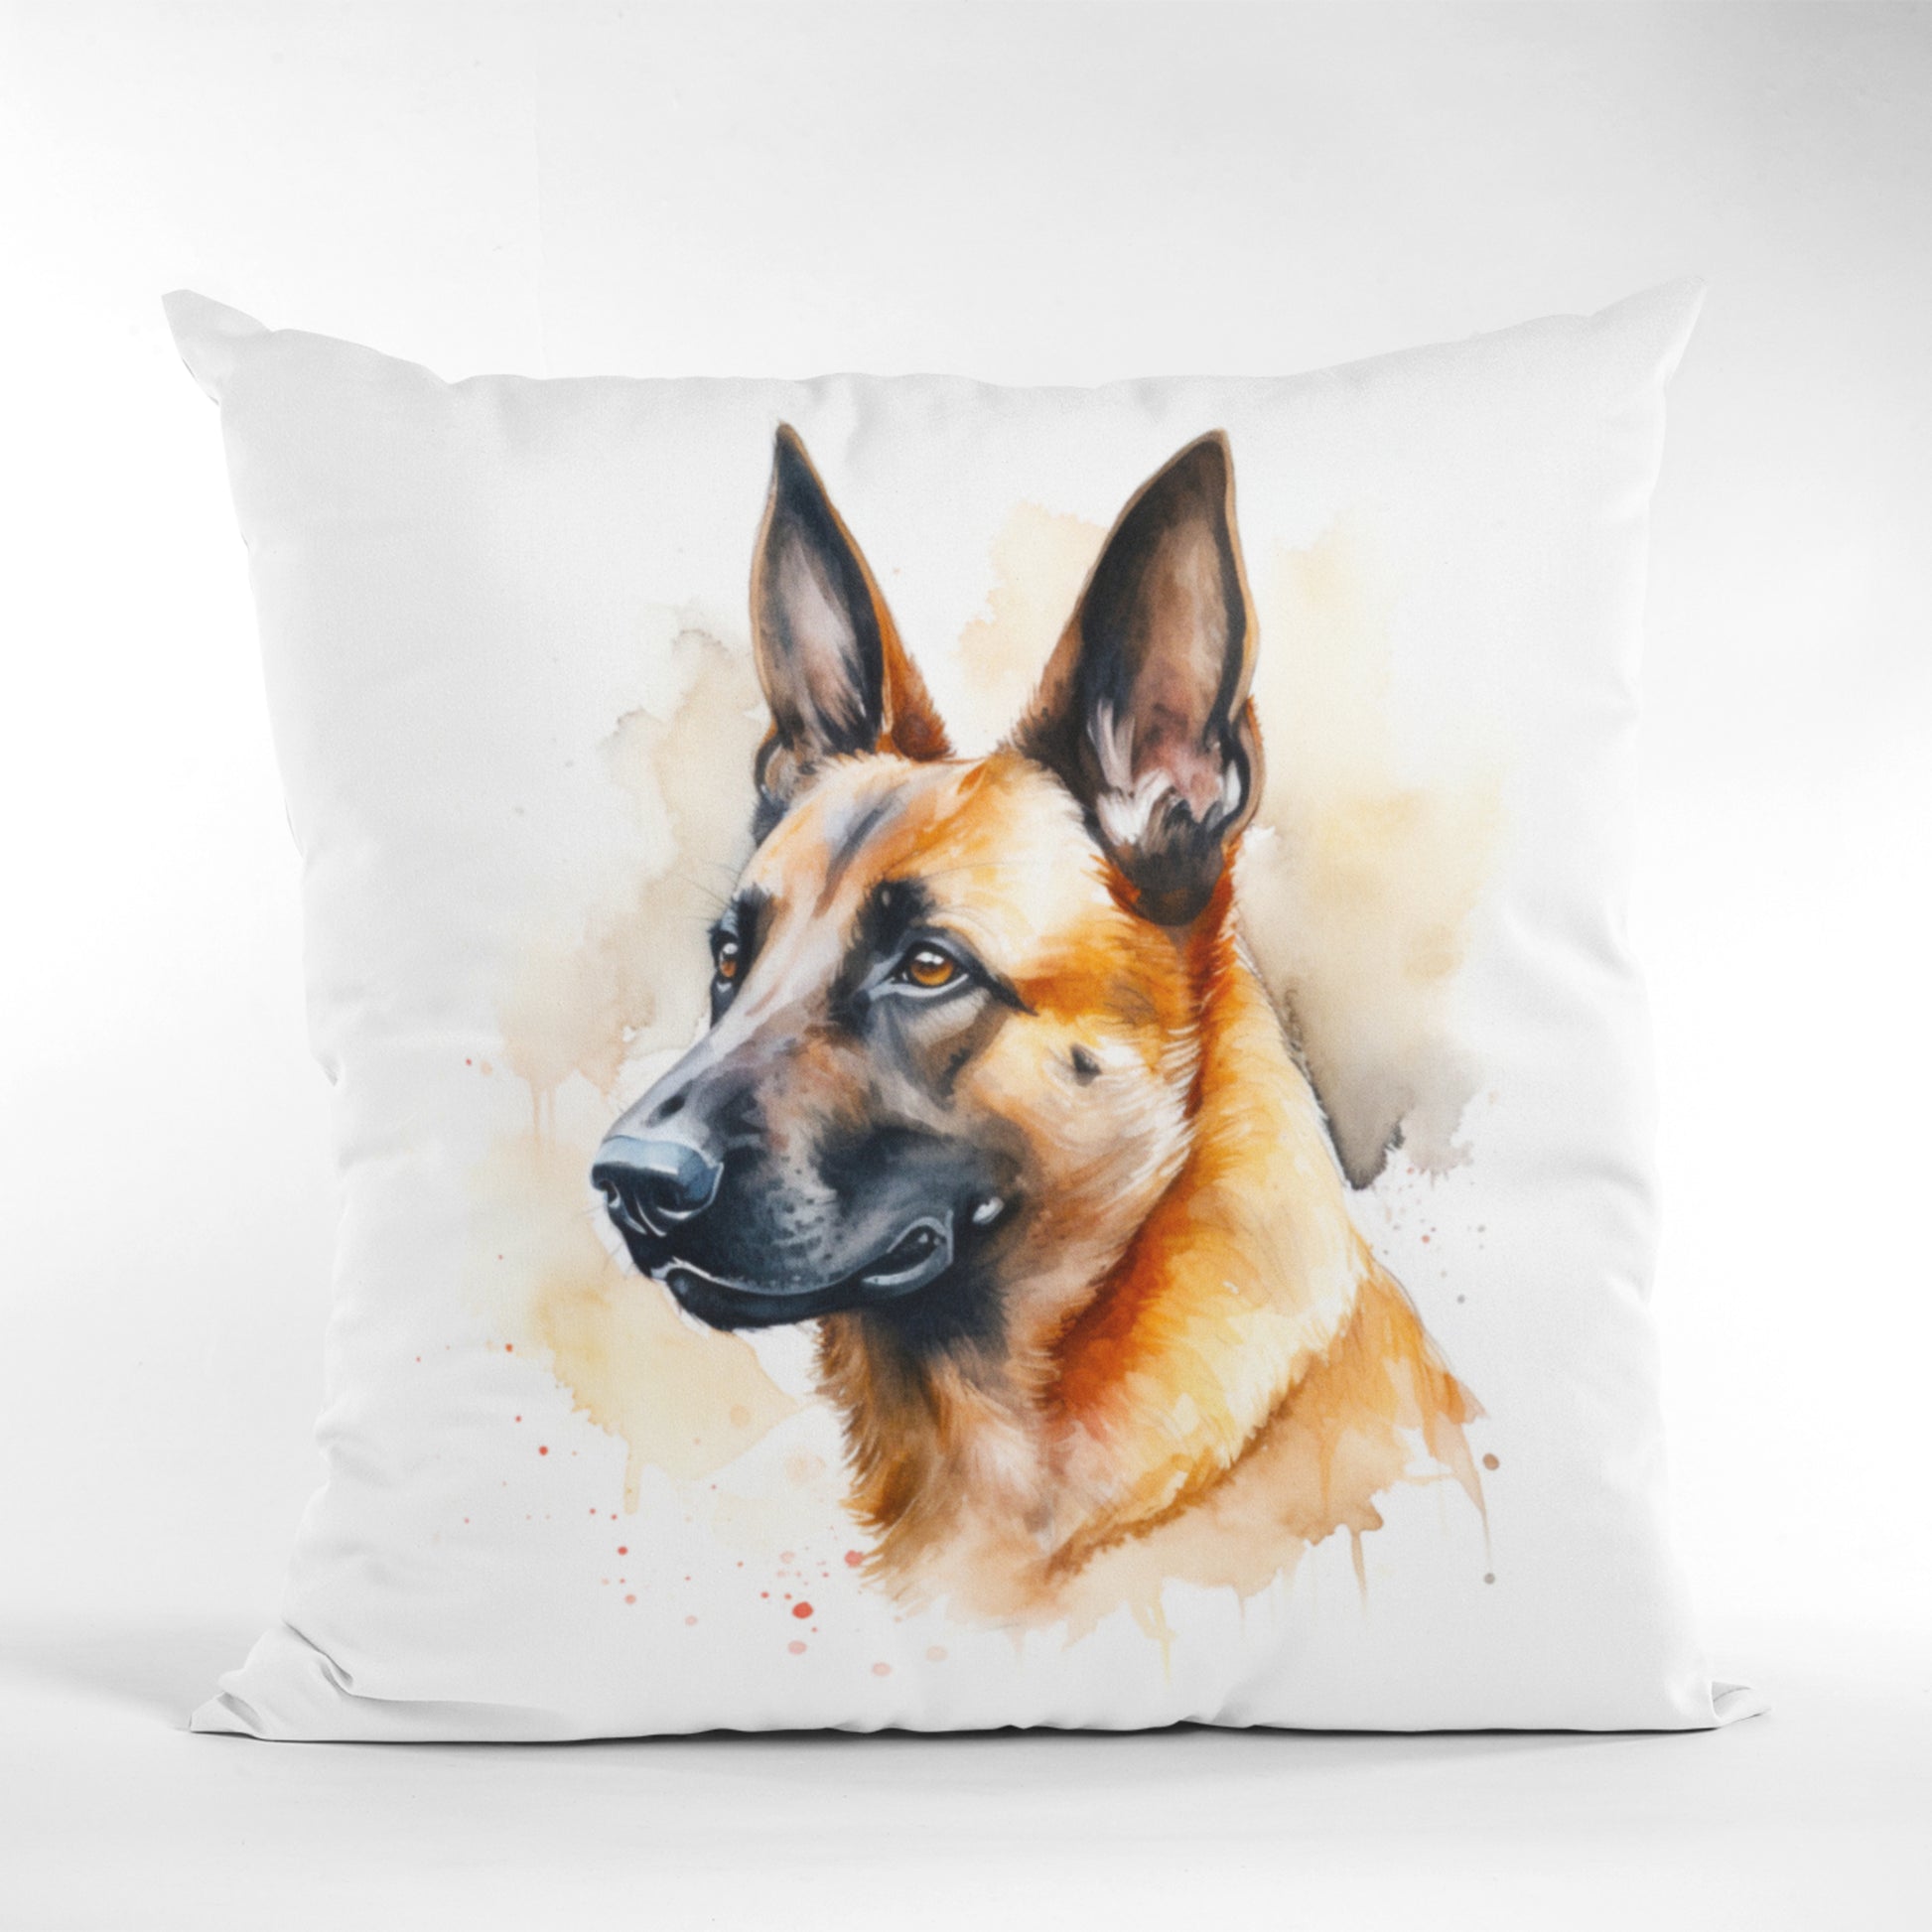 Stylish Printed Throw Pillow with German Shepherd